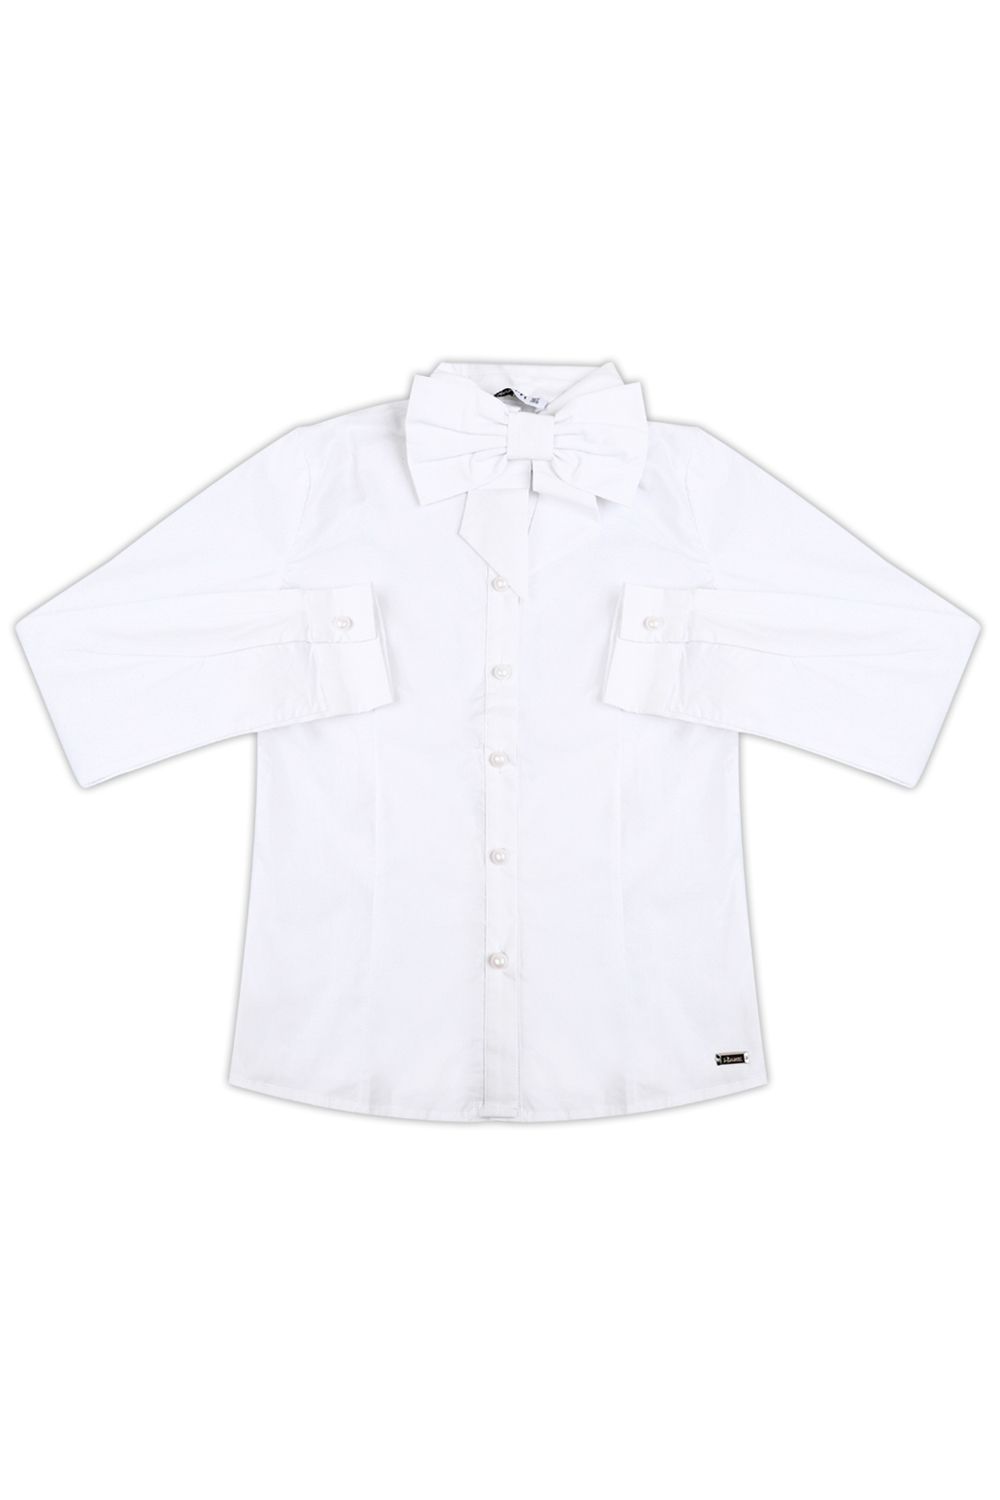 Блуза De Salitto, размер 134, цвет белый 819089 - фото 1